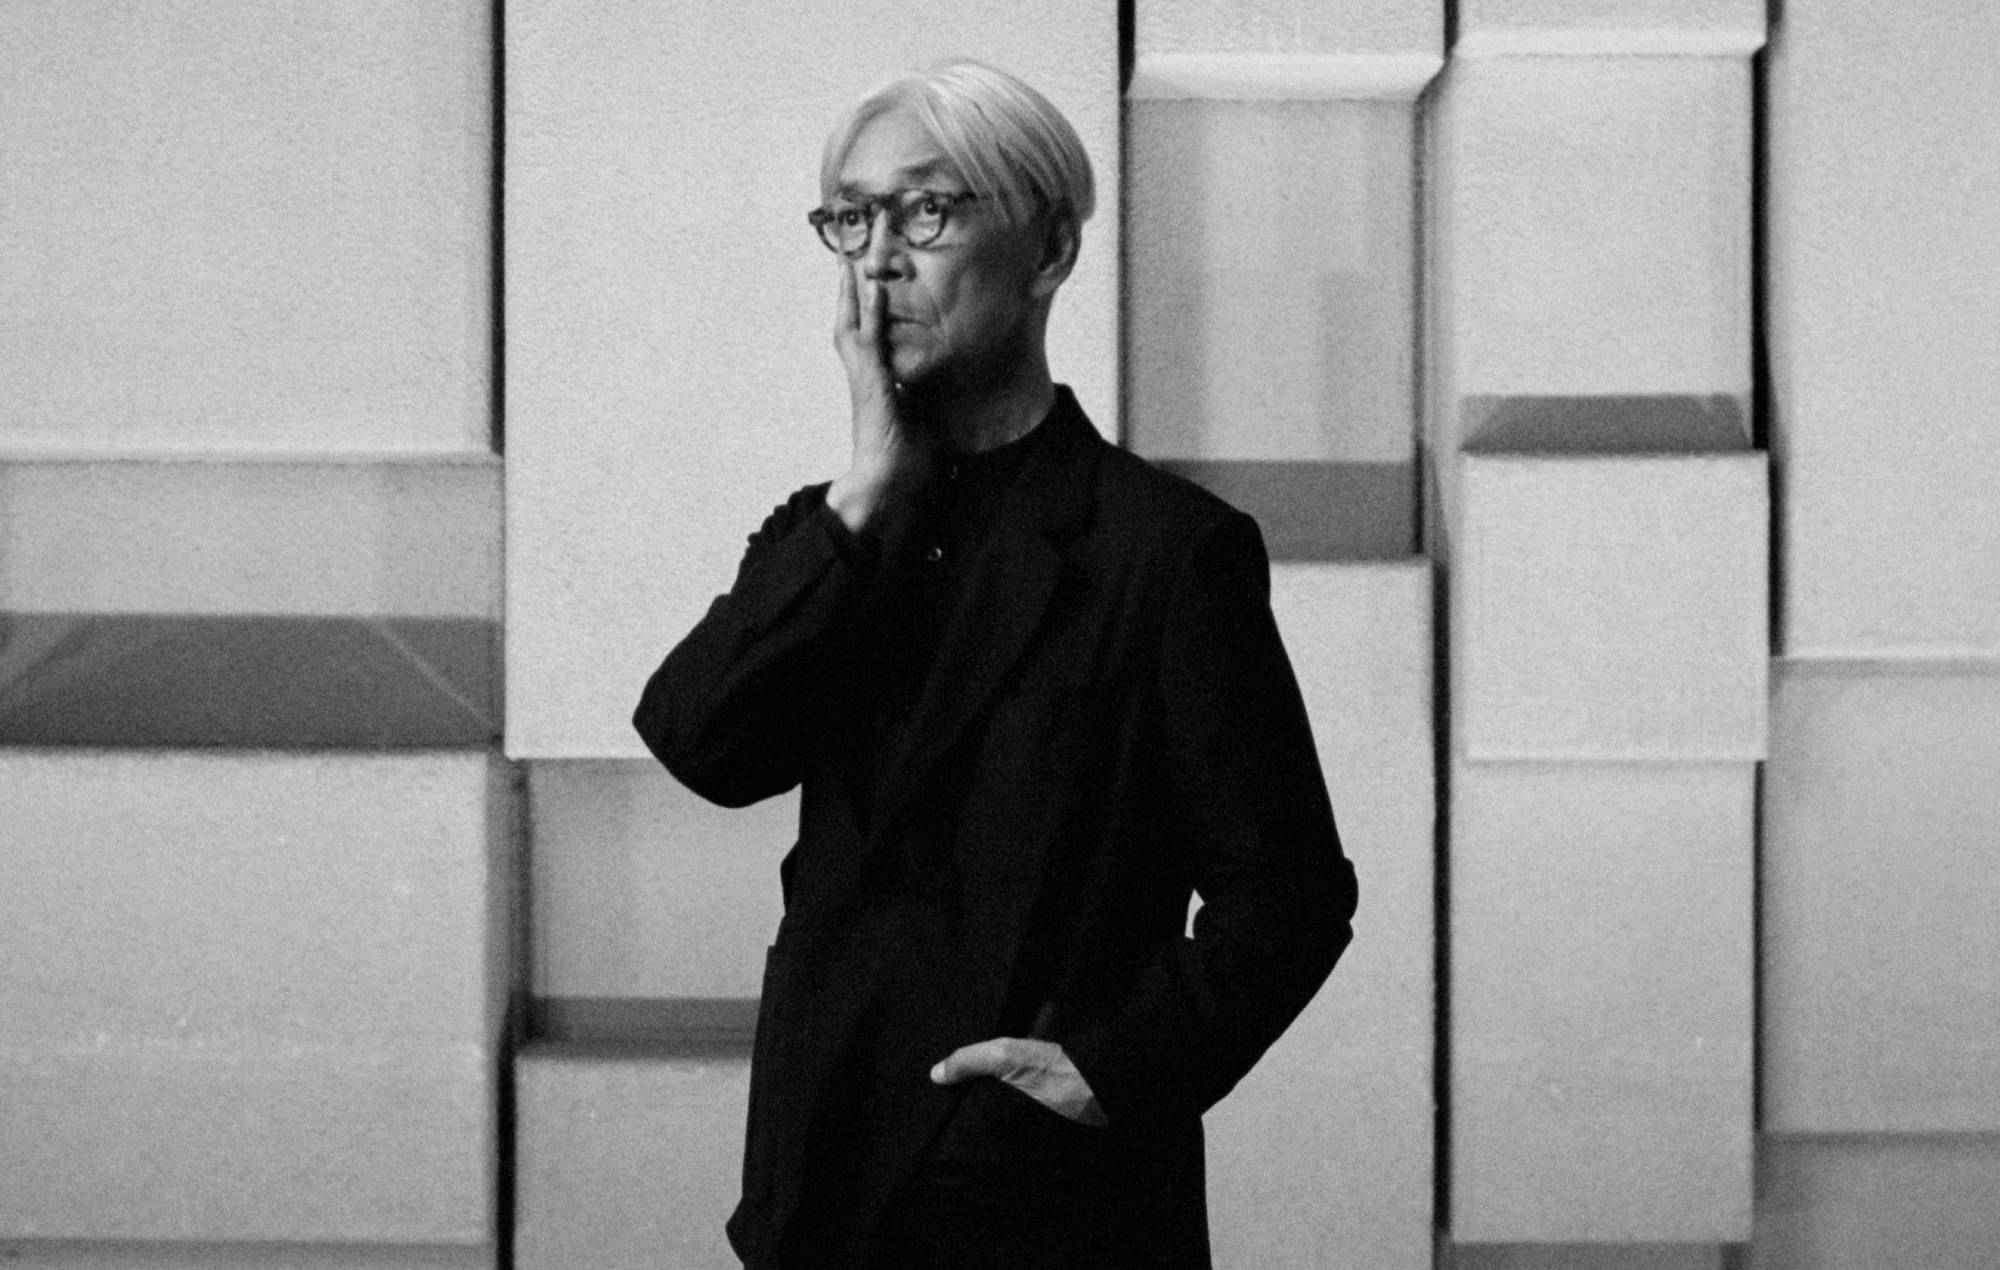 ‘Opus’: Album of Ryuichi Sakamoto’s last performance announced with lead single ‘Tong Poo’